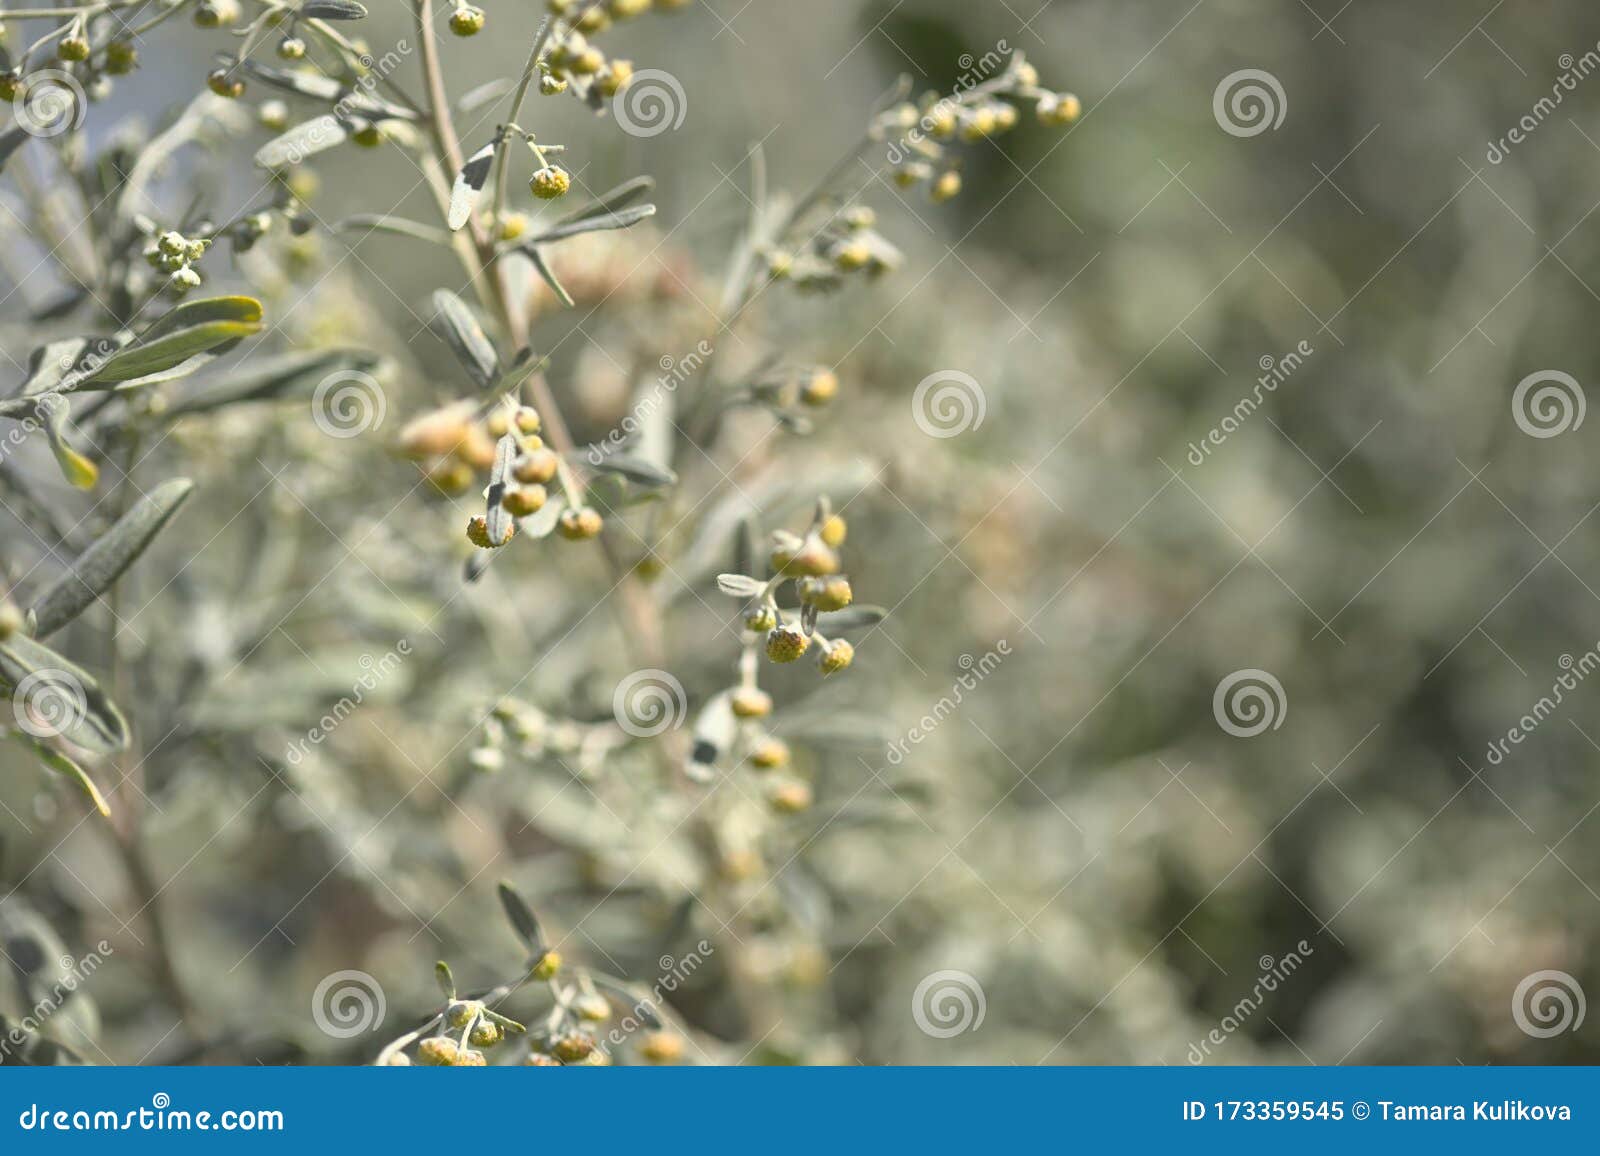 flora of gran canaria - artemisia thuscula, canarian wormwood